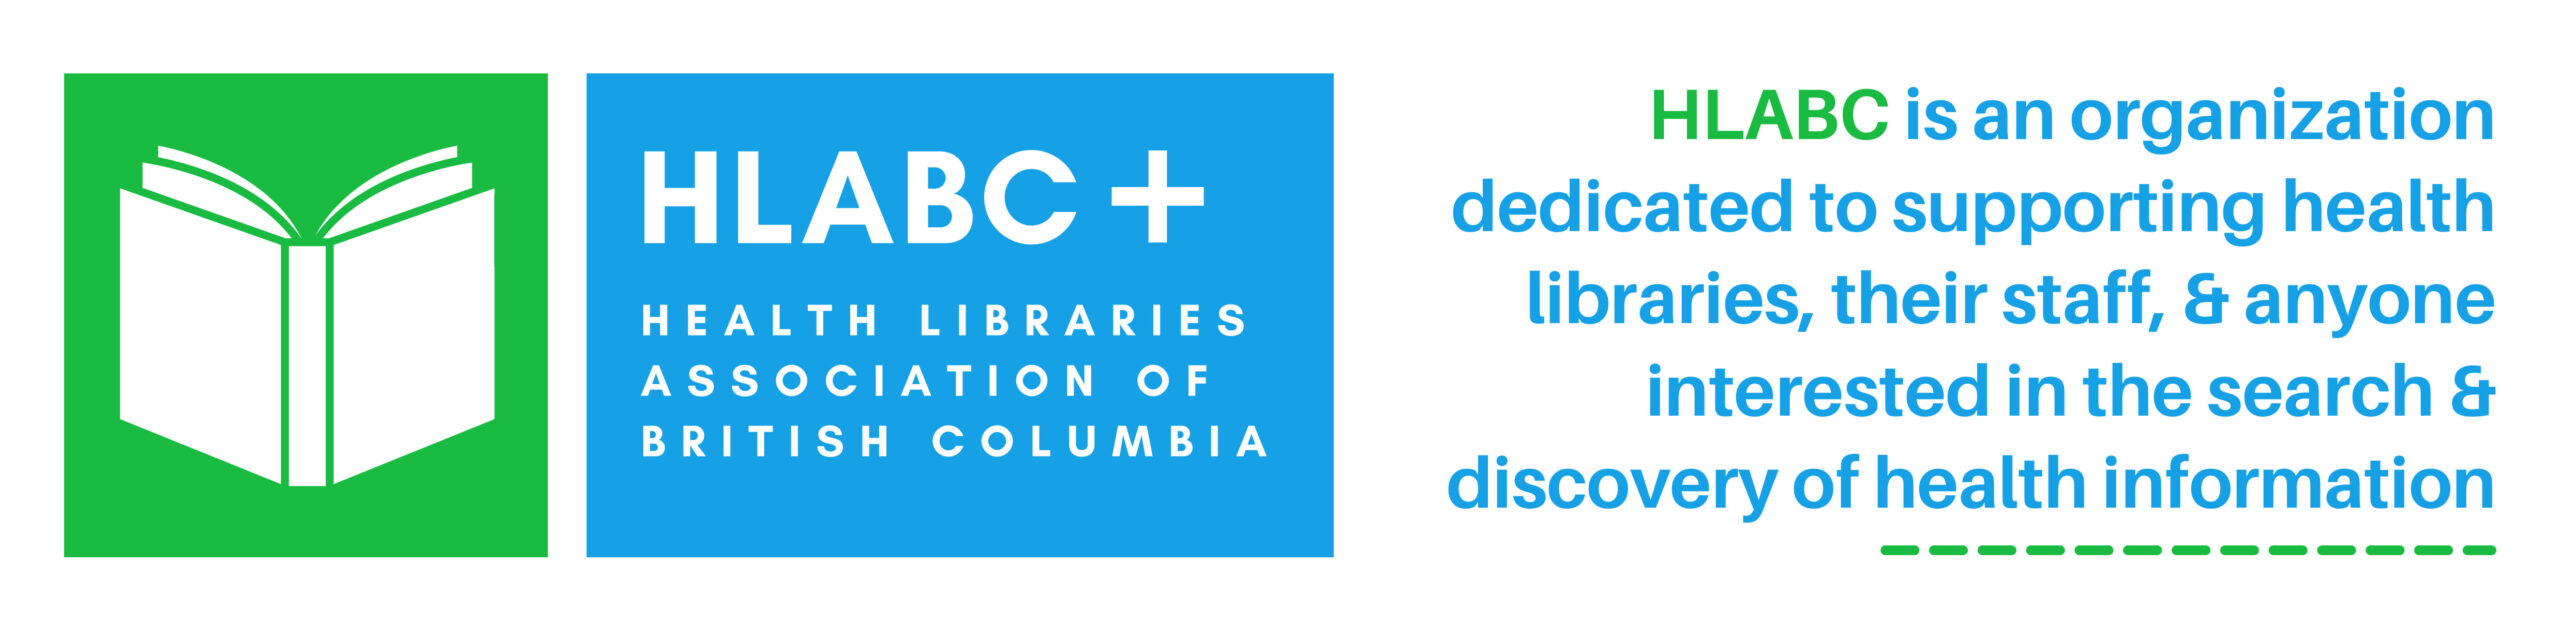 Health Libraries Association of British Columbia